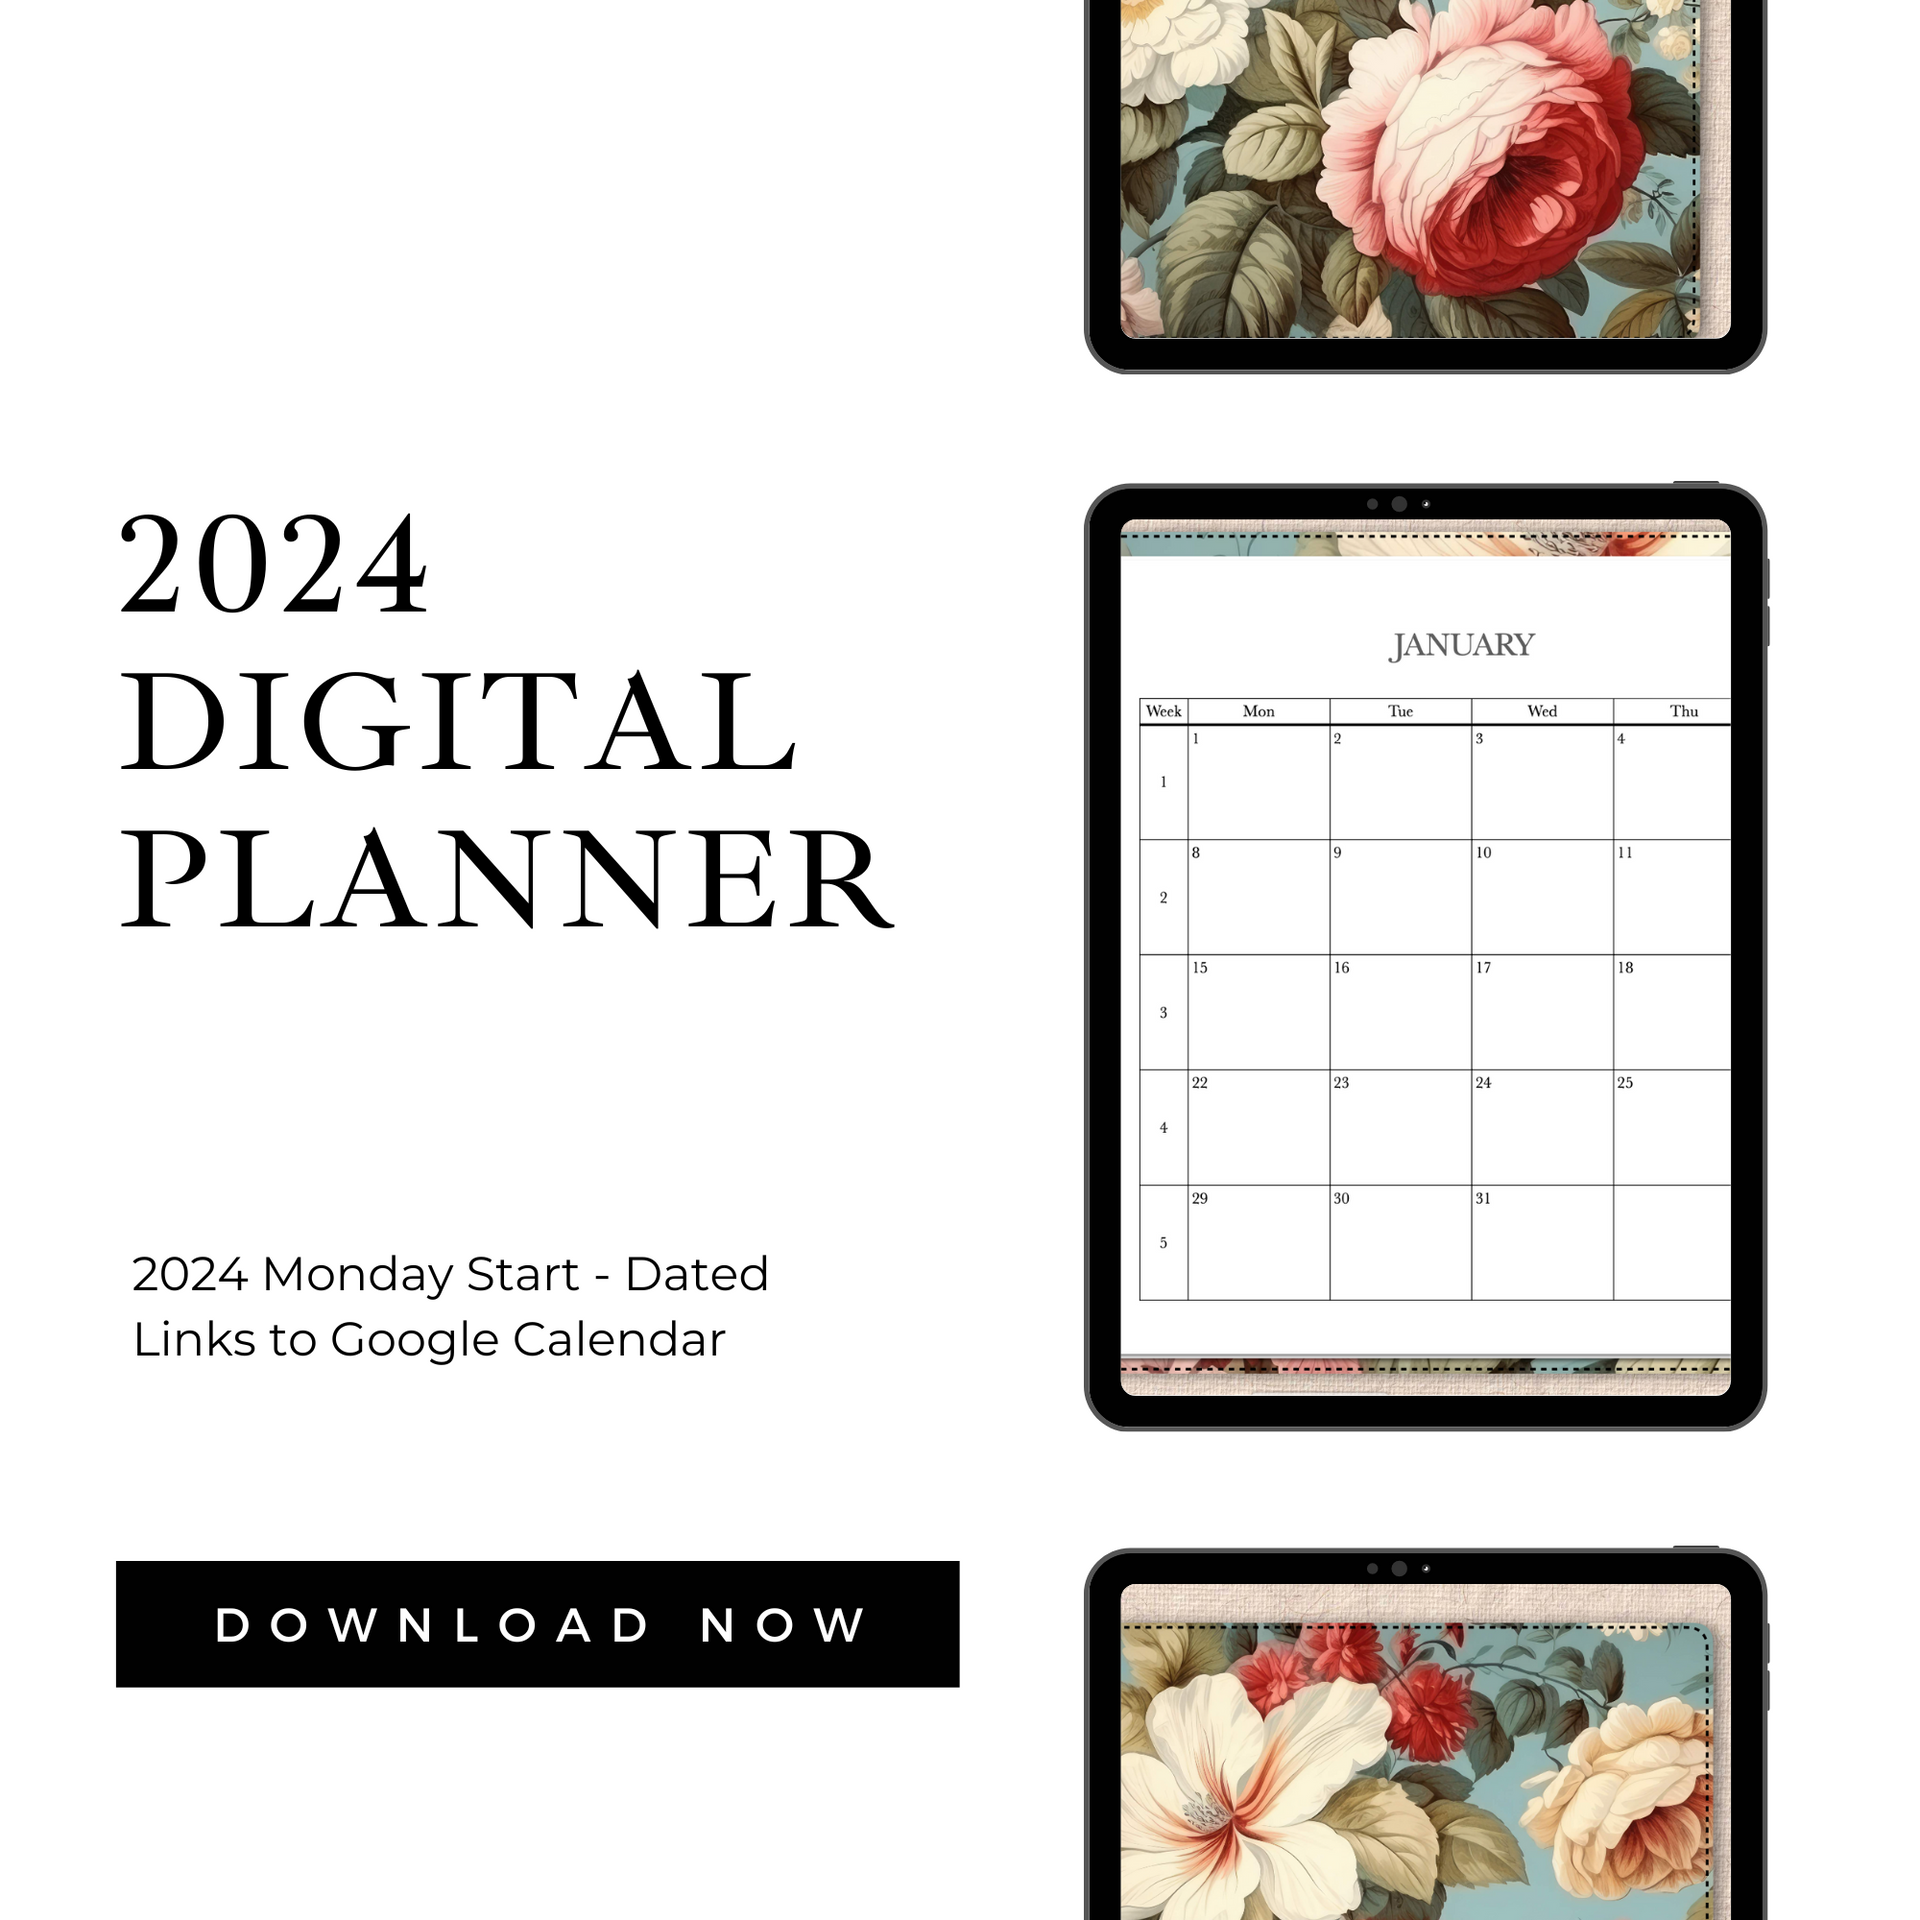 2024 Digital Planner With Google Calendar Links, 2024 Digital